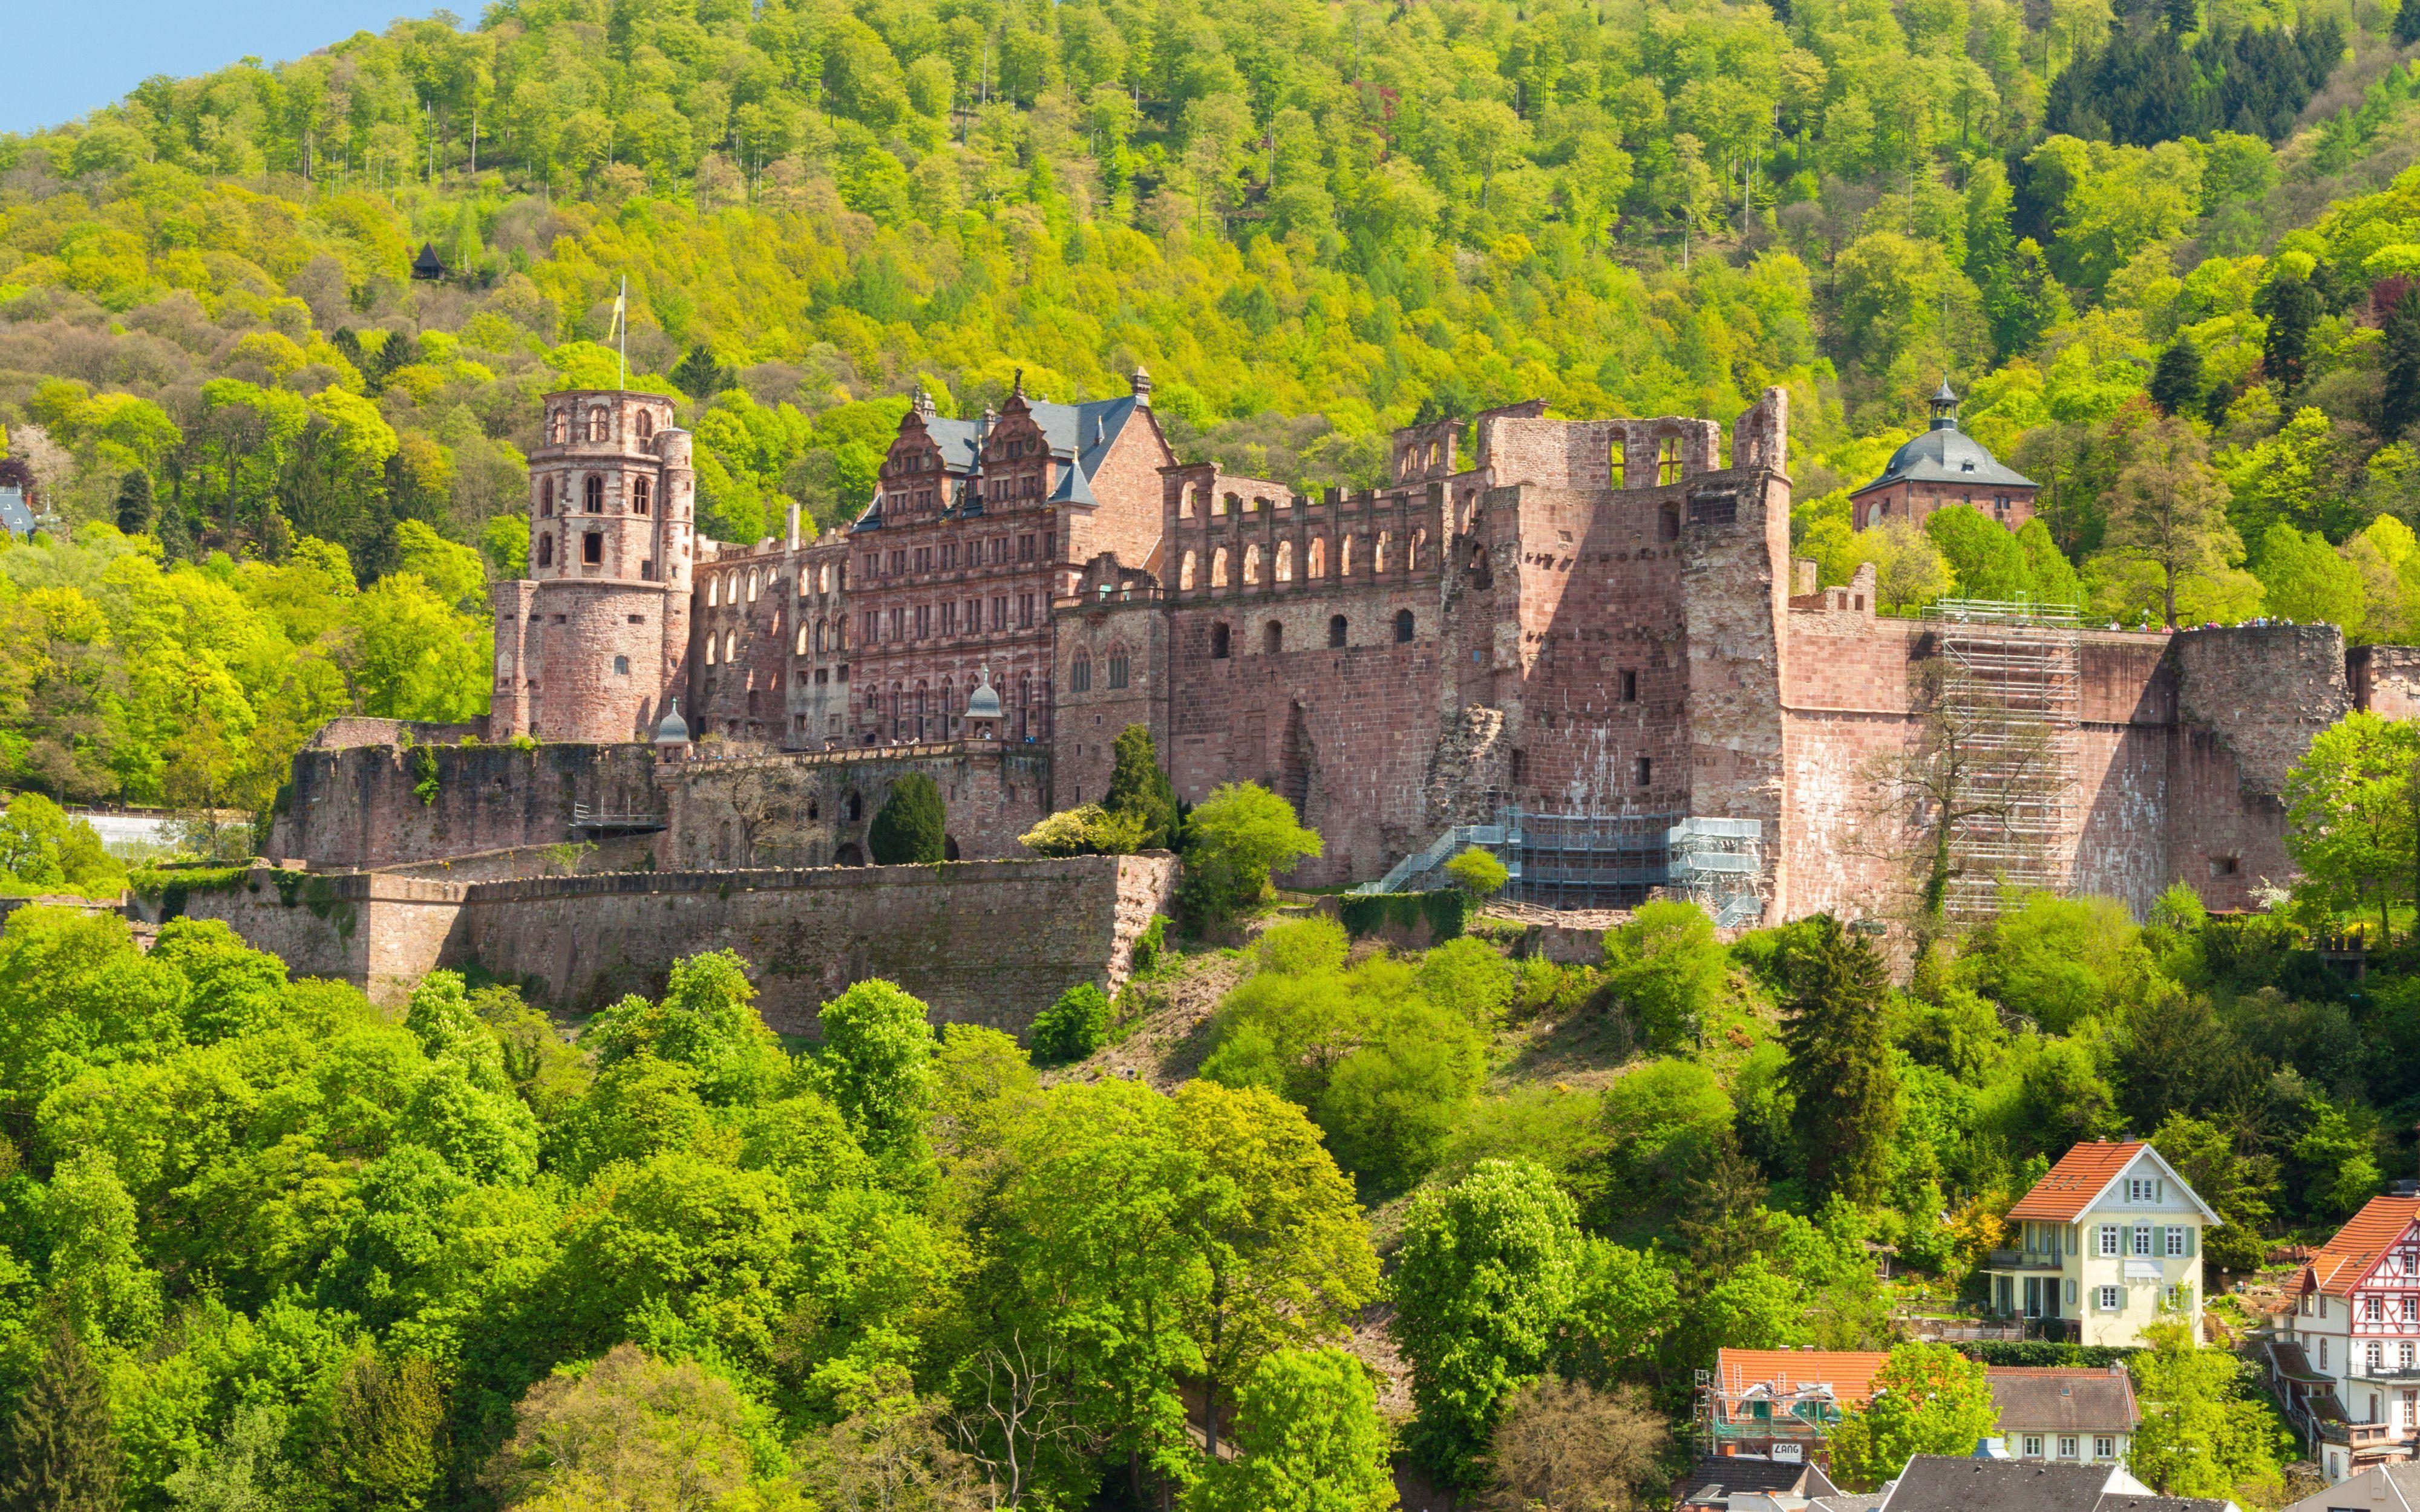 The ruins of the castle Heidelberg, Baden